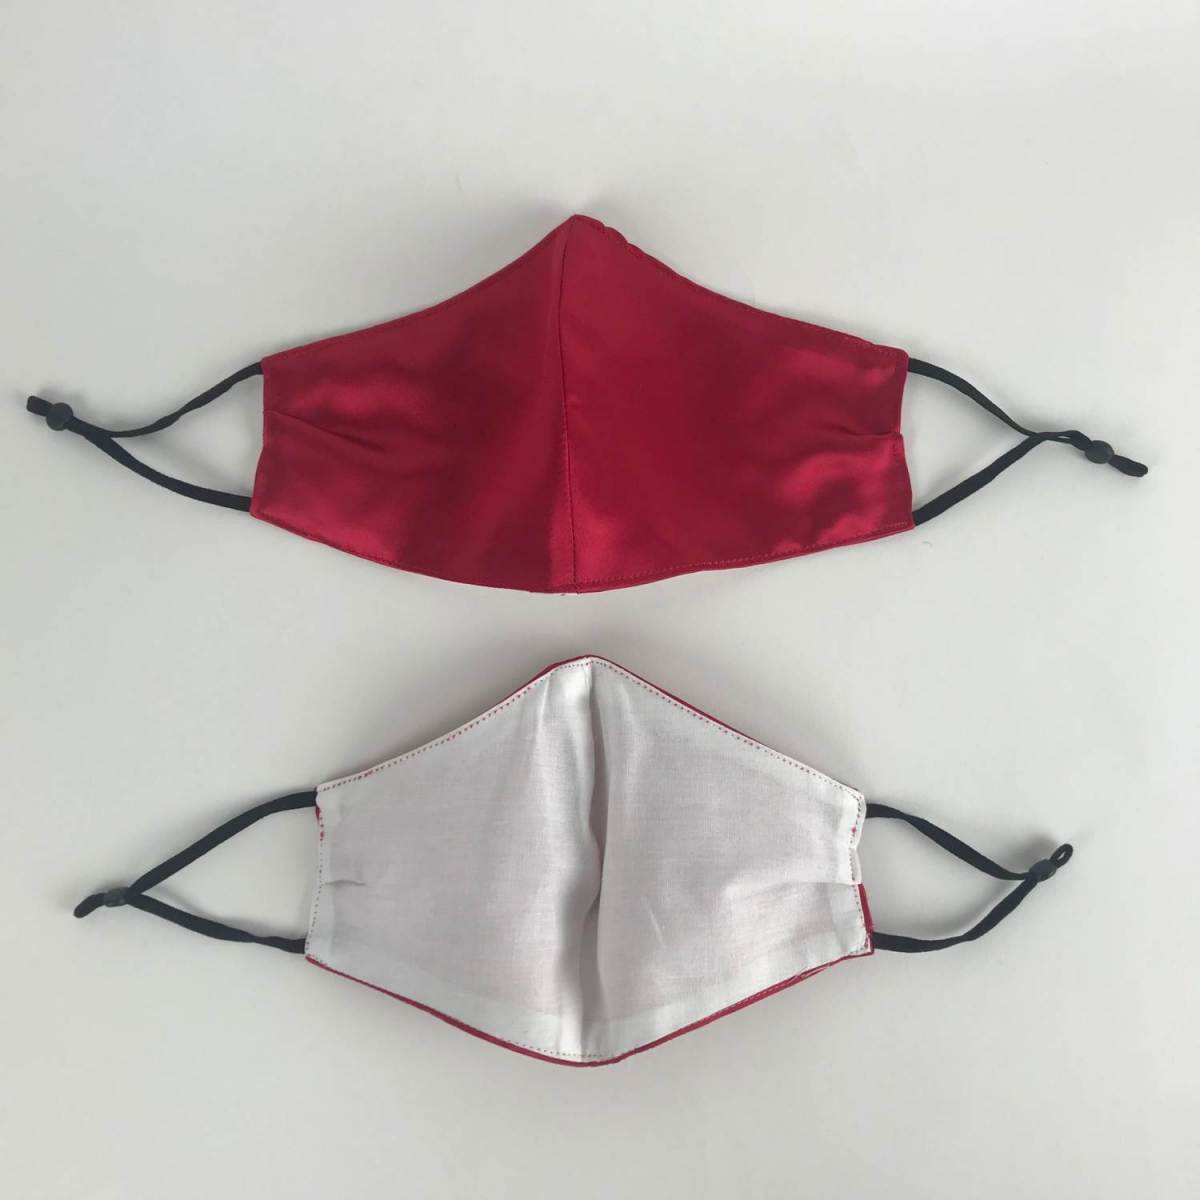 B1764 02 Red FM mens ties facemasks con murphys menswear cork scaled - - Con Murphys Menswear